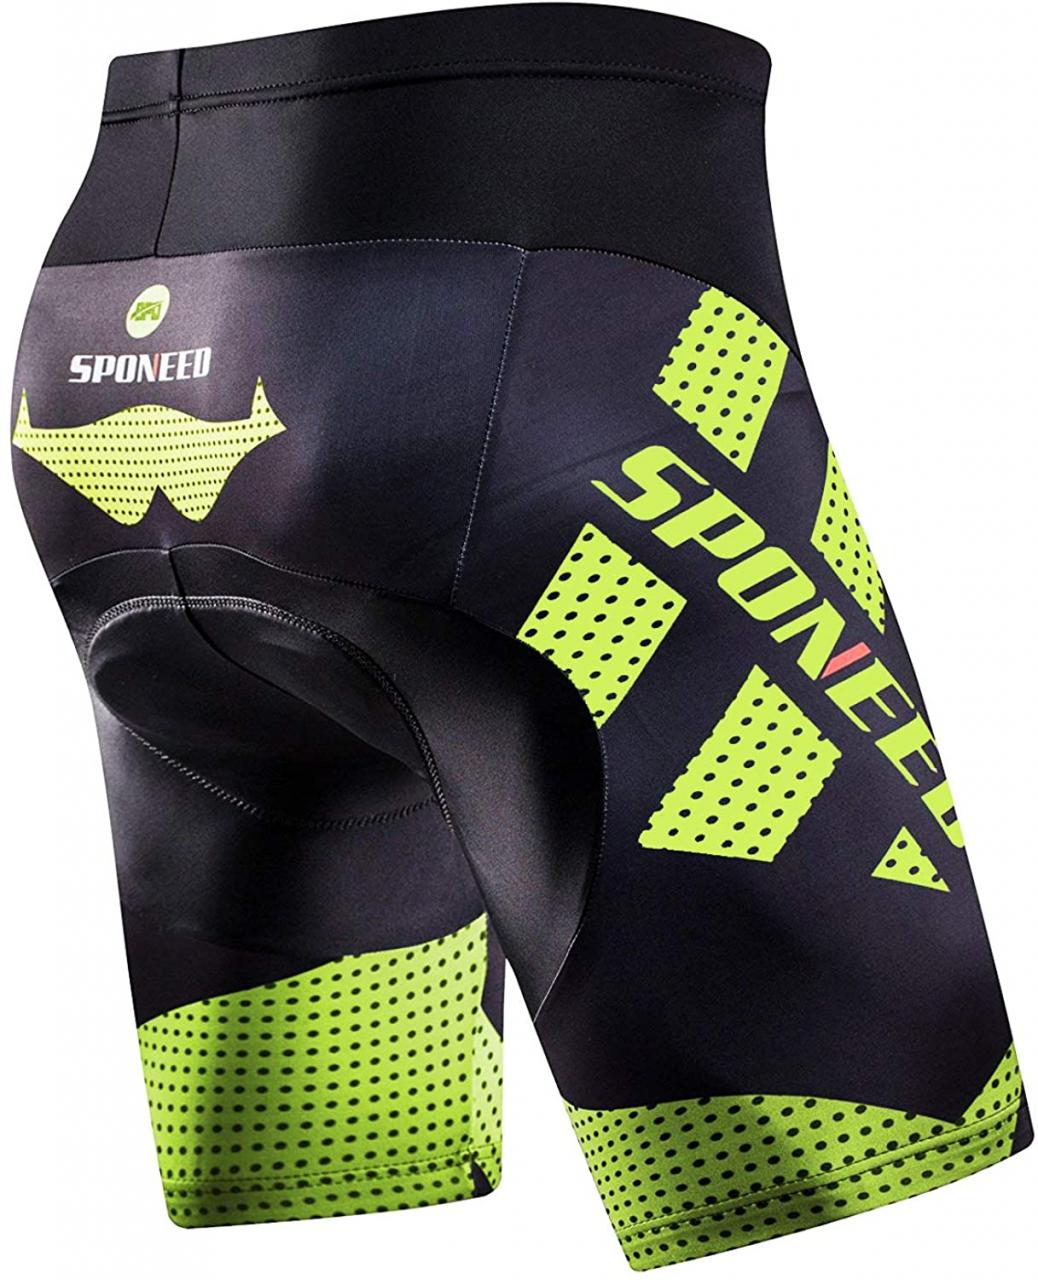 Buy sponeed Men's Cycling Shorts Padded Bicycle Riding Pants Bike Biking  Clothes Cycle Wear Tights Online in Hong Kong. B01LX4HT55